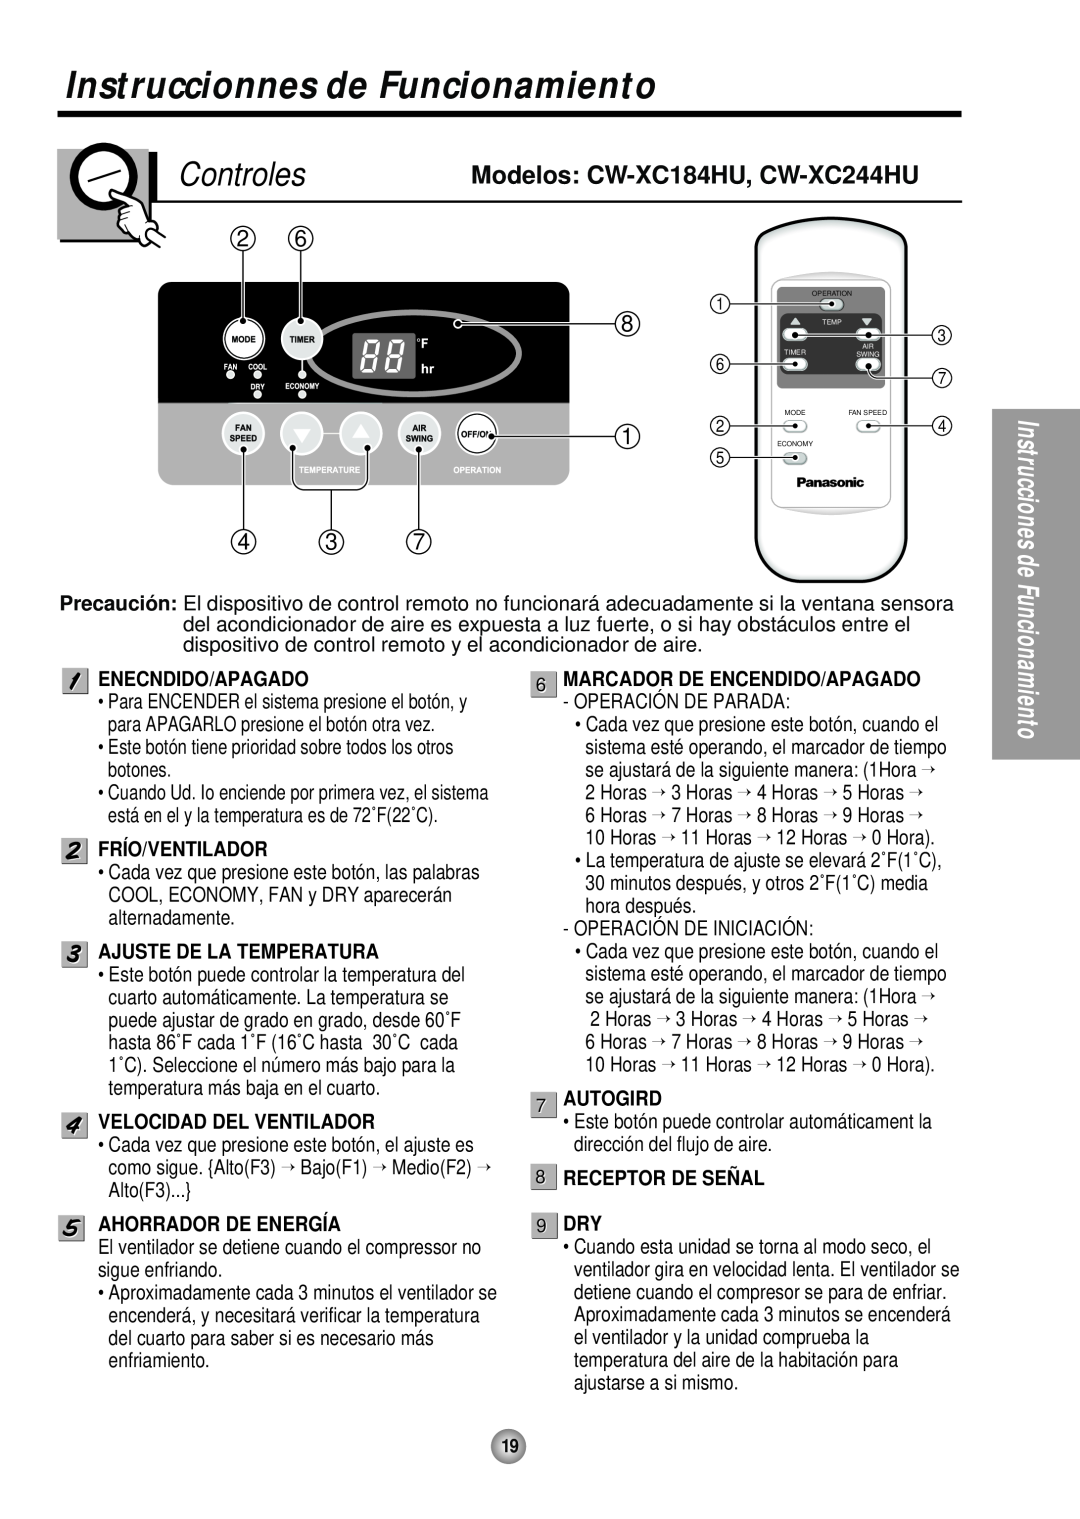 Panasonic Instruccionnes de Funcionamiento, Controles, Modelos CW-XC184HU, CW-XC244HU, Enecndido/Apagado, 7AUTOGIRD 